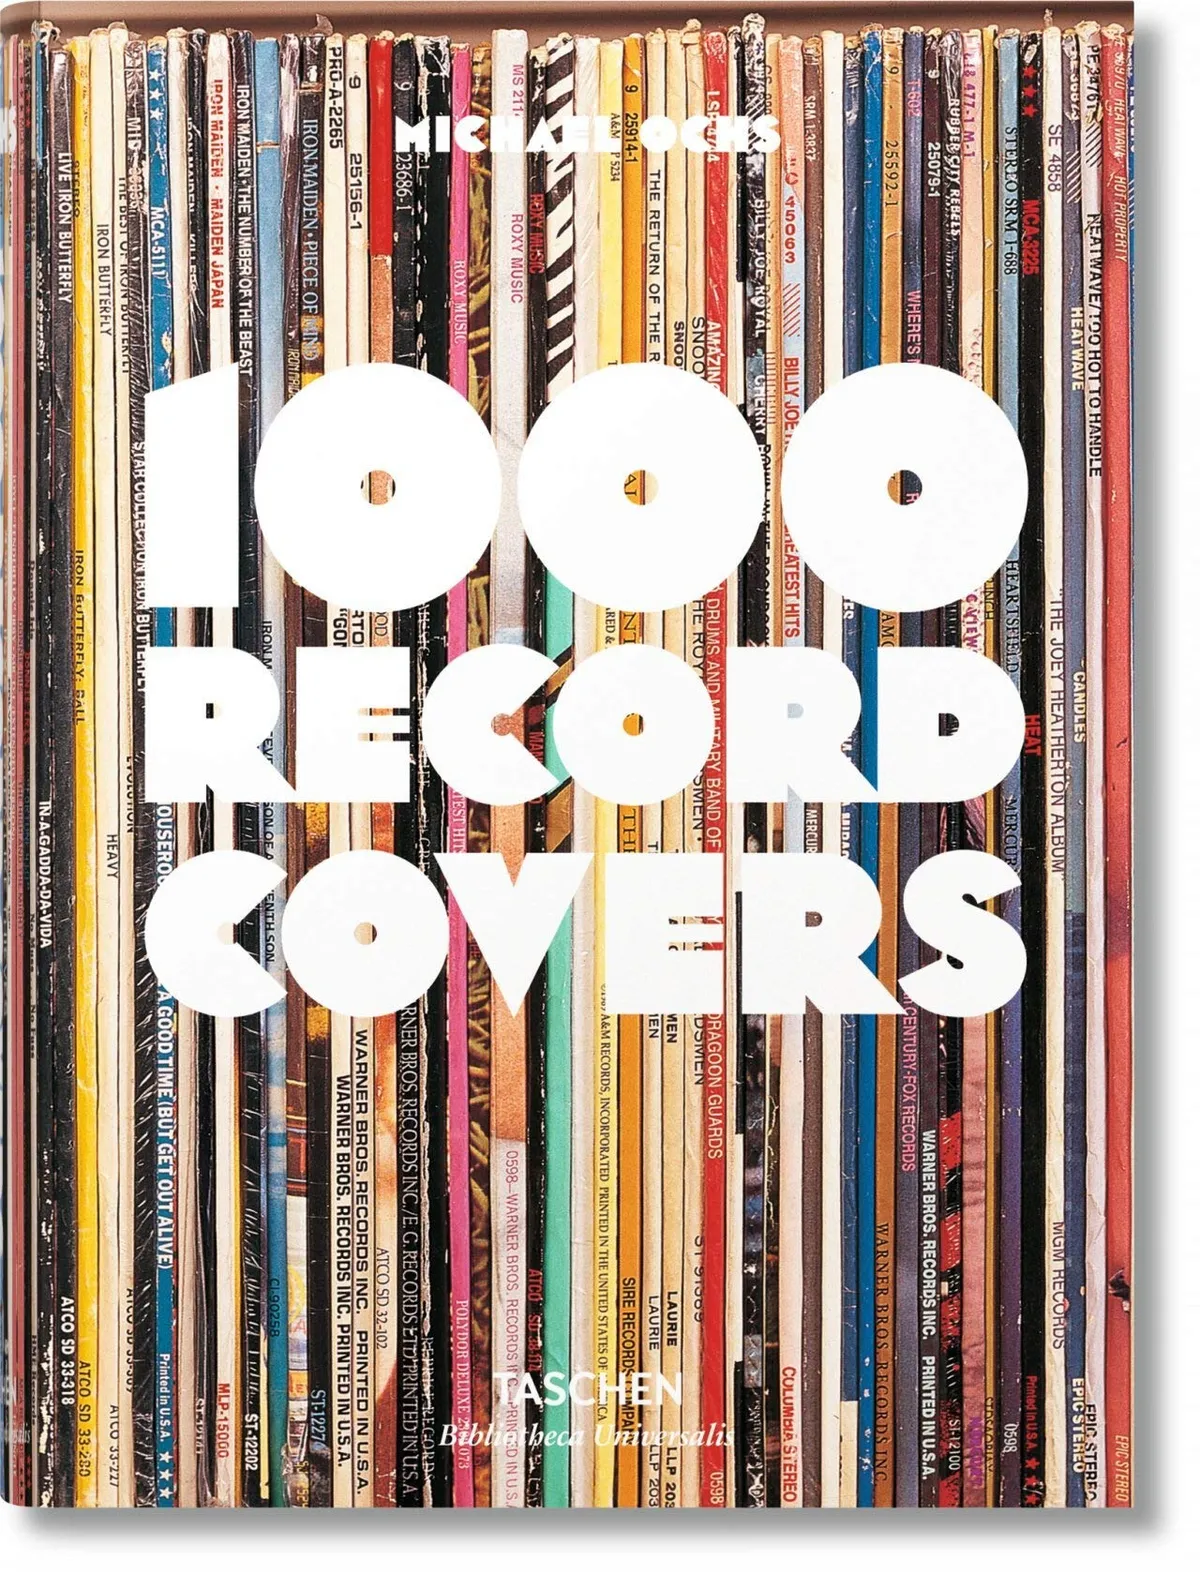 1000 Record Covers, Michael Ochs